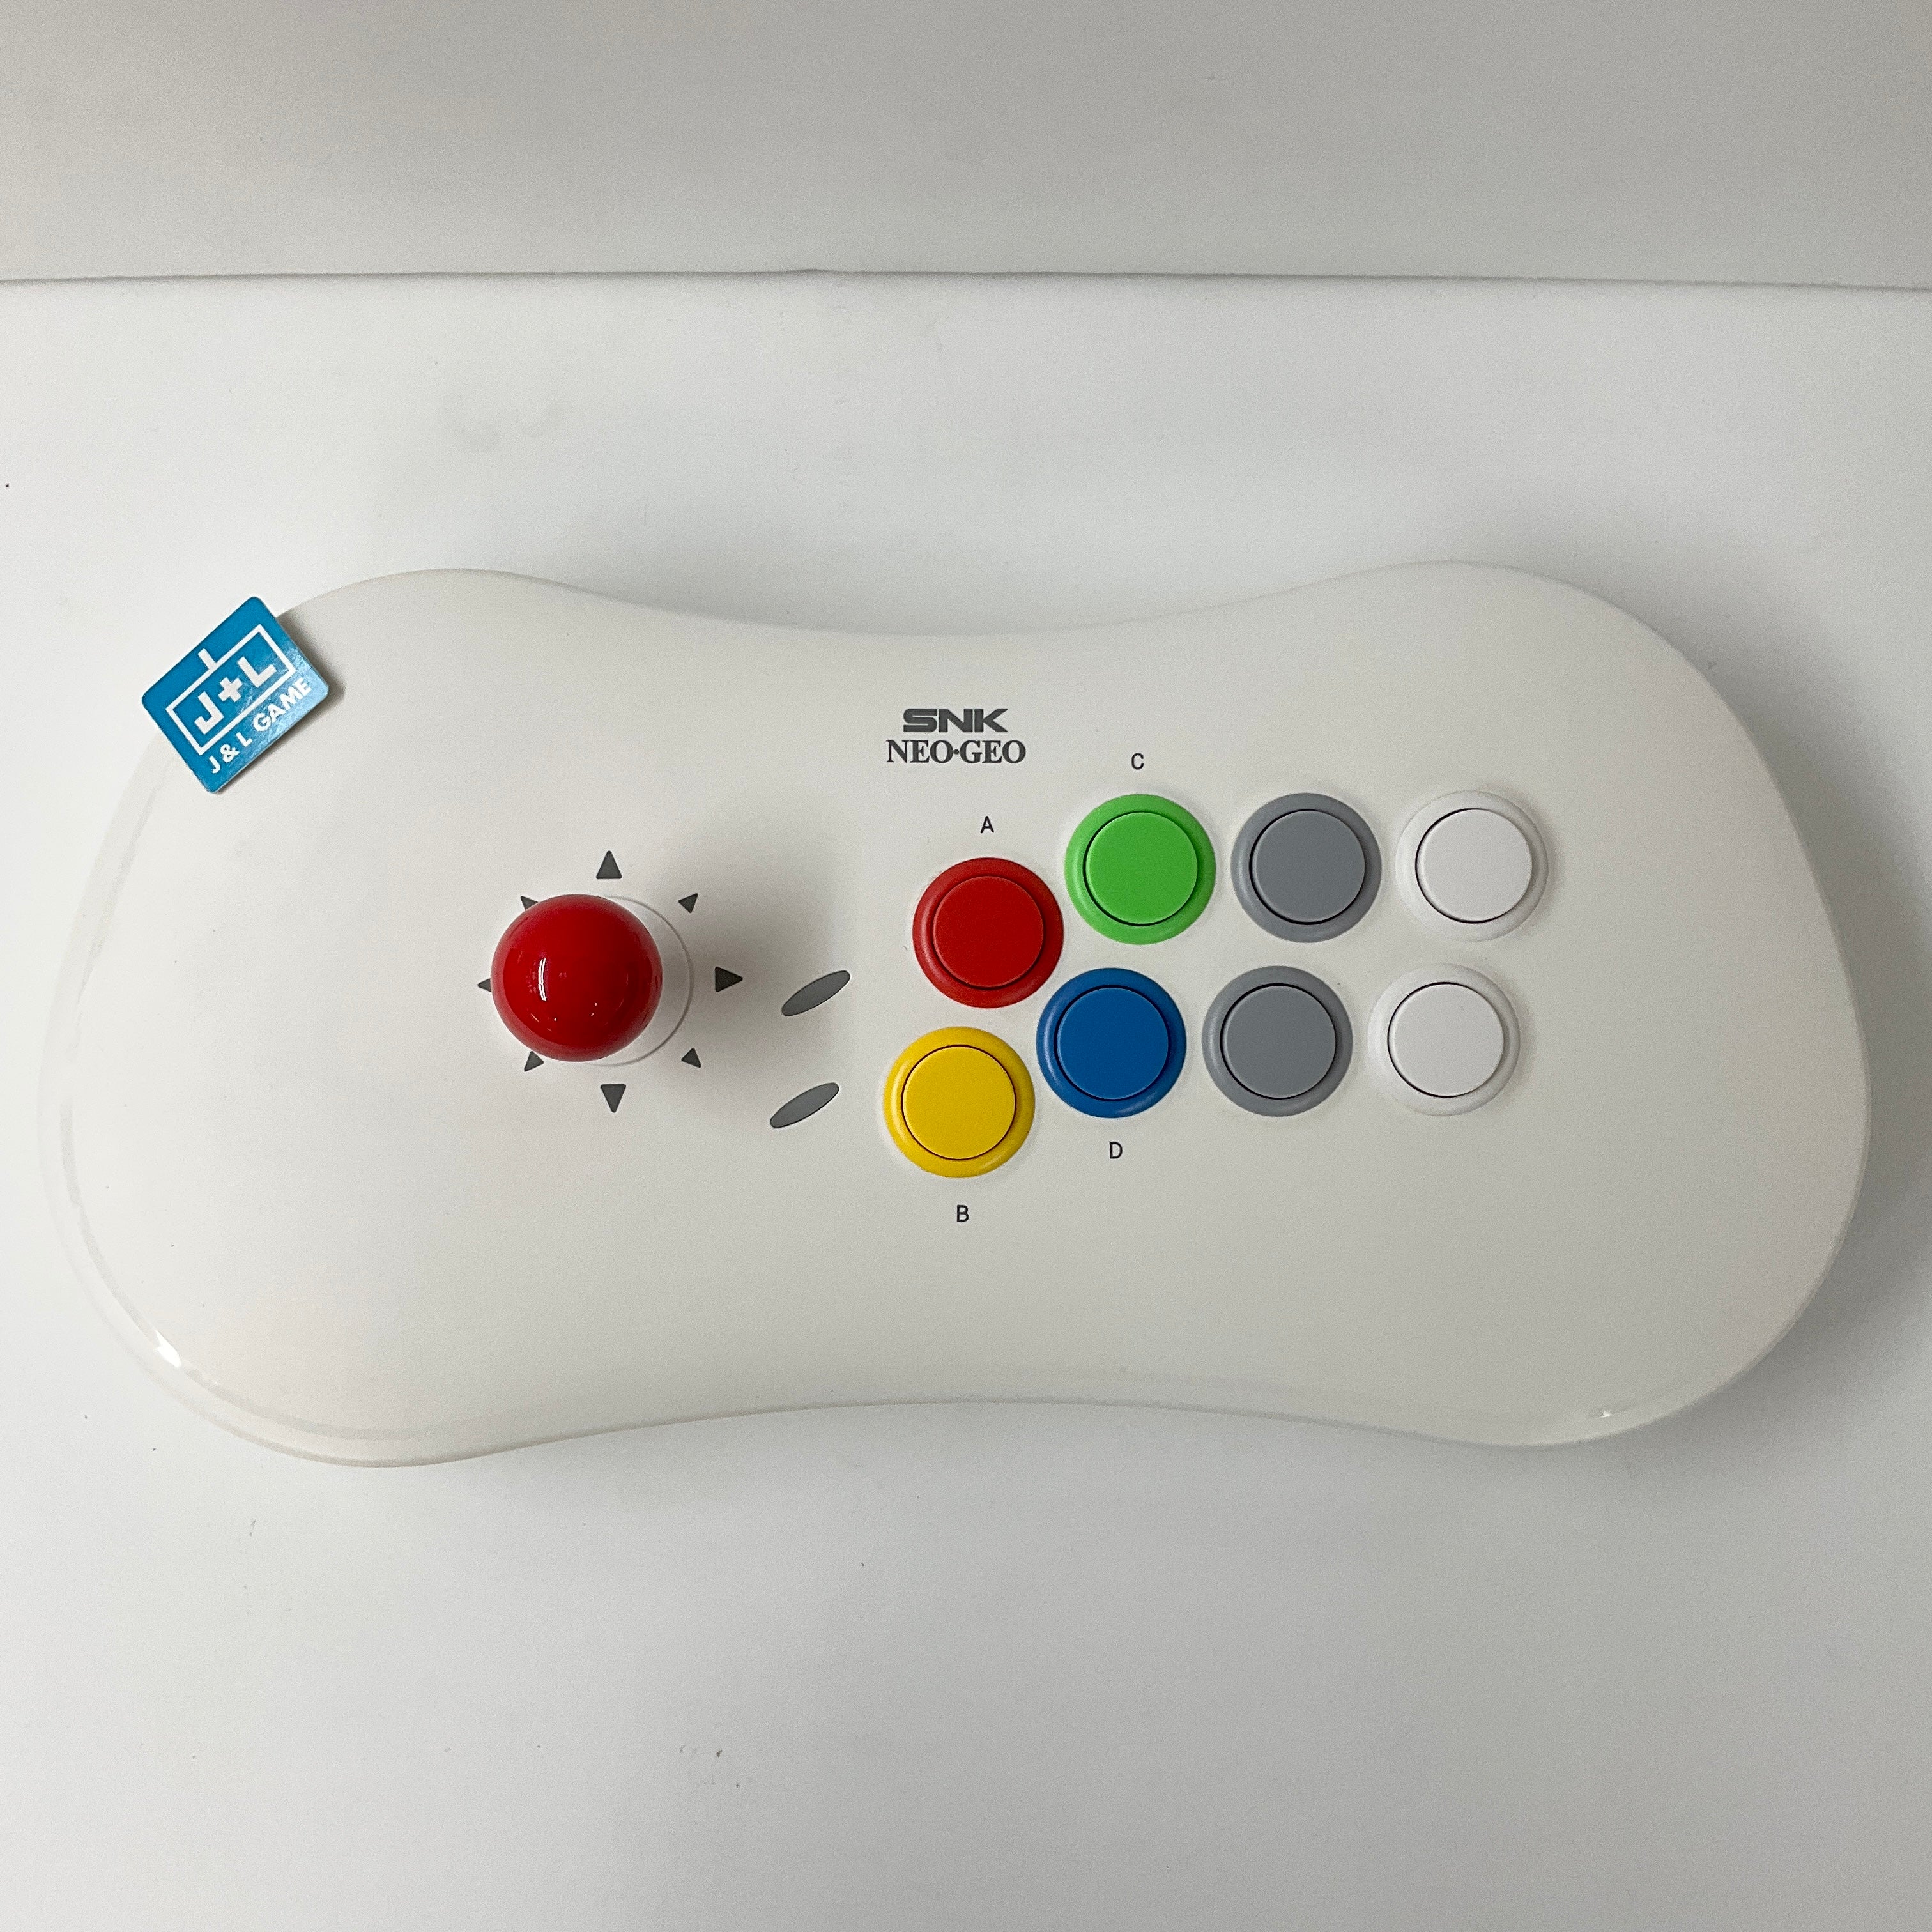 Neogeo Arcade Stick Pro - (NGM) Neo Geo Mini [Pre-Owned] Accessories SNK   